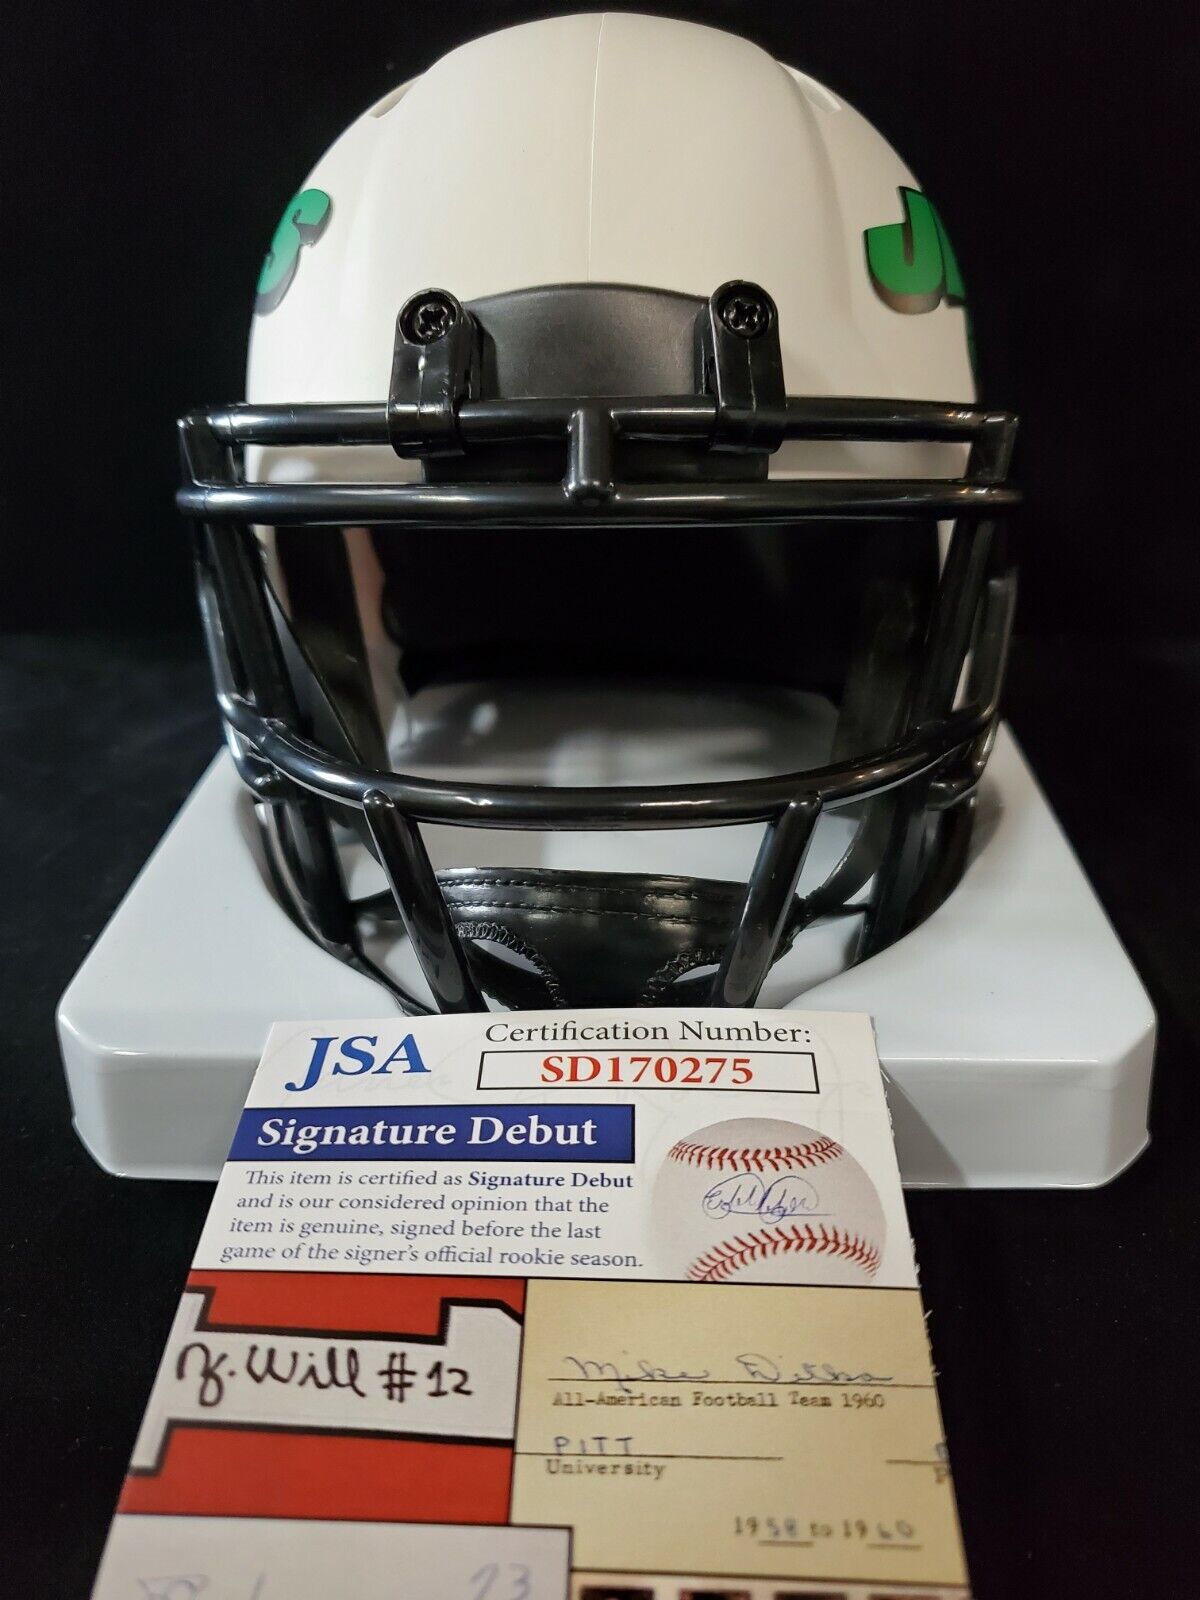 MVP Authentics N.Y. Jets Alijah Vera-Tucker Autographed Signed Lunar Mini Helmet Jsa Coa 134.10 sports jersey framing , jersey framing